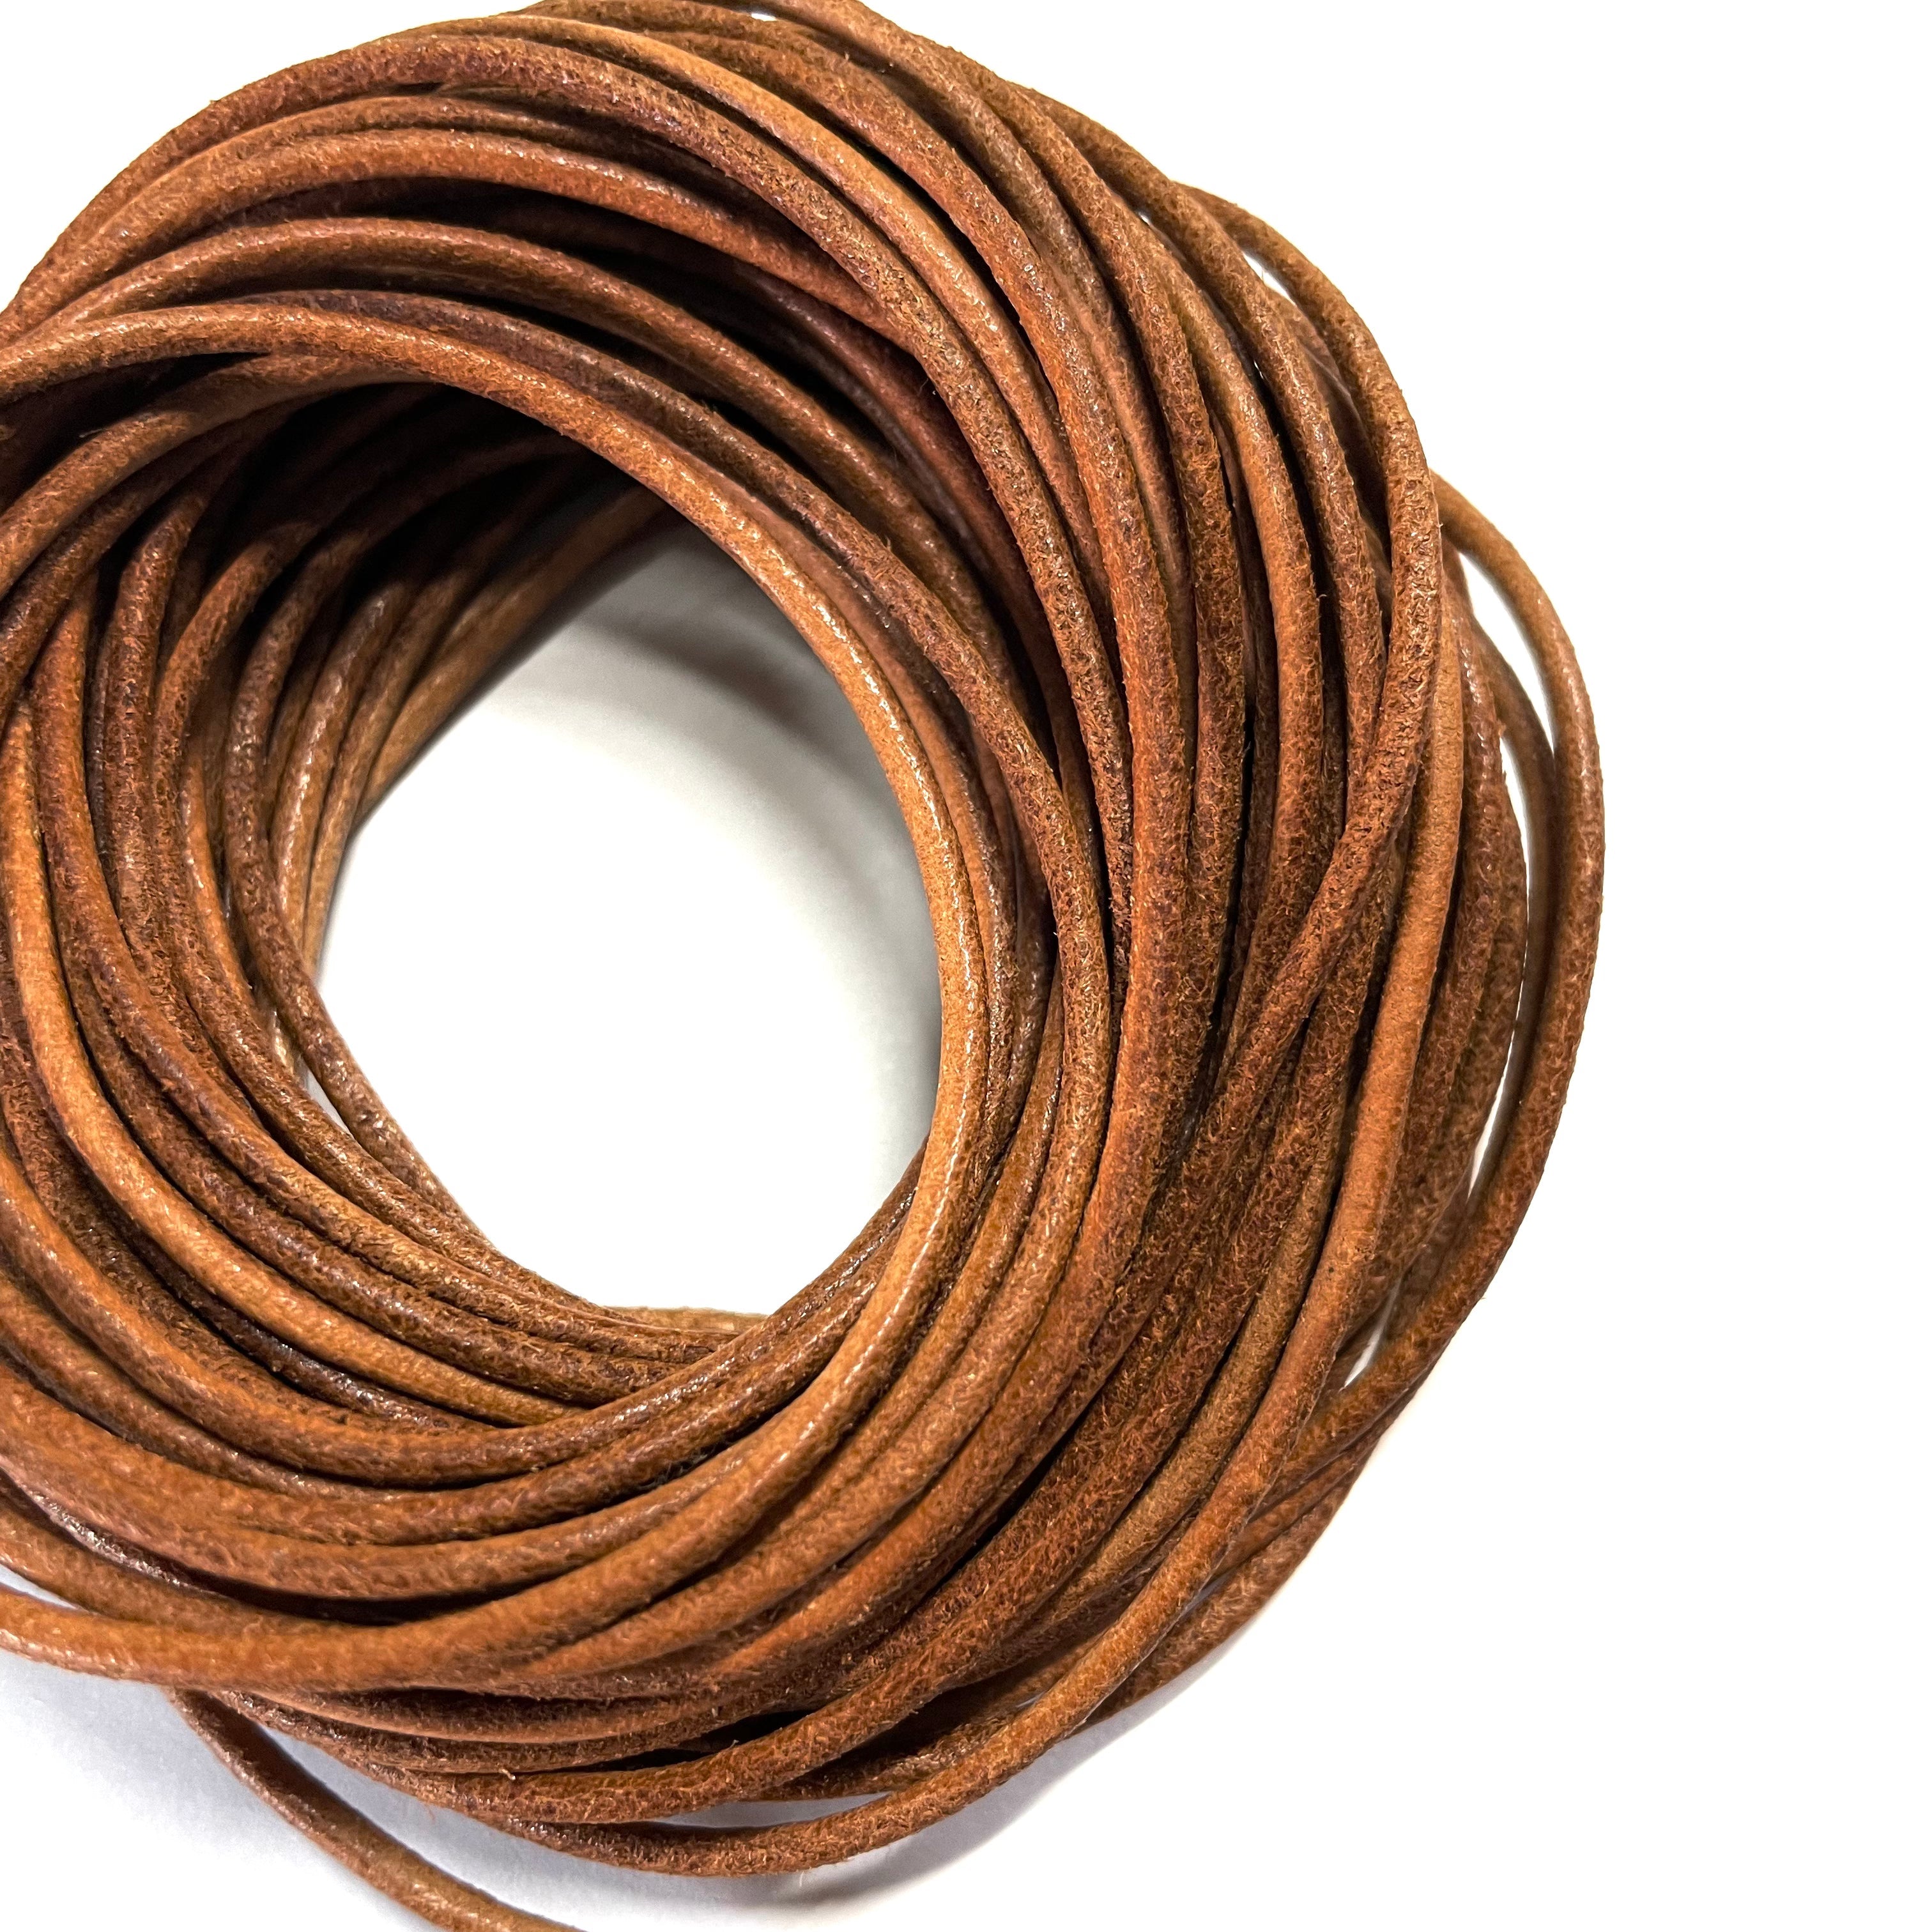 Natural Genuine Leather Cord per 10mtrs - Natural Tan Brown 1.5mm